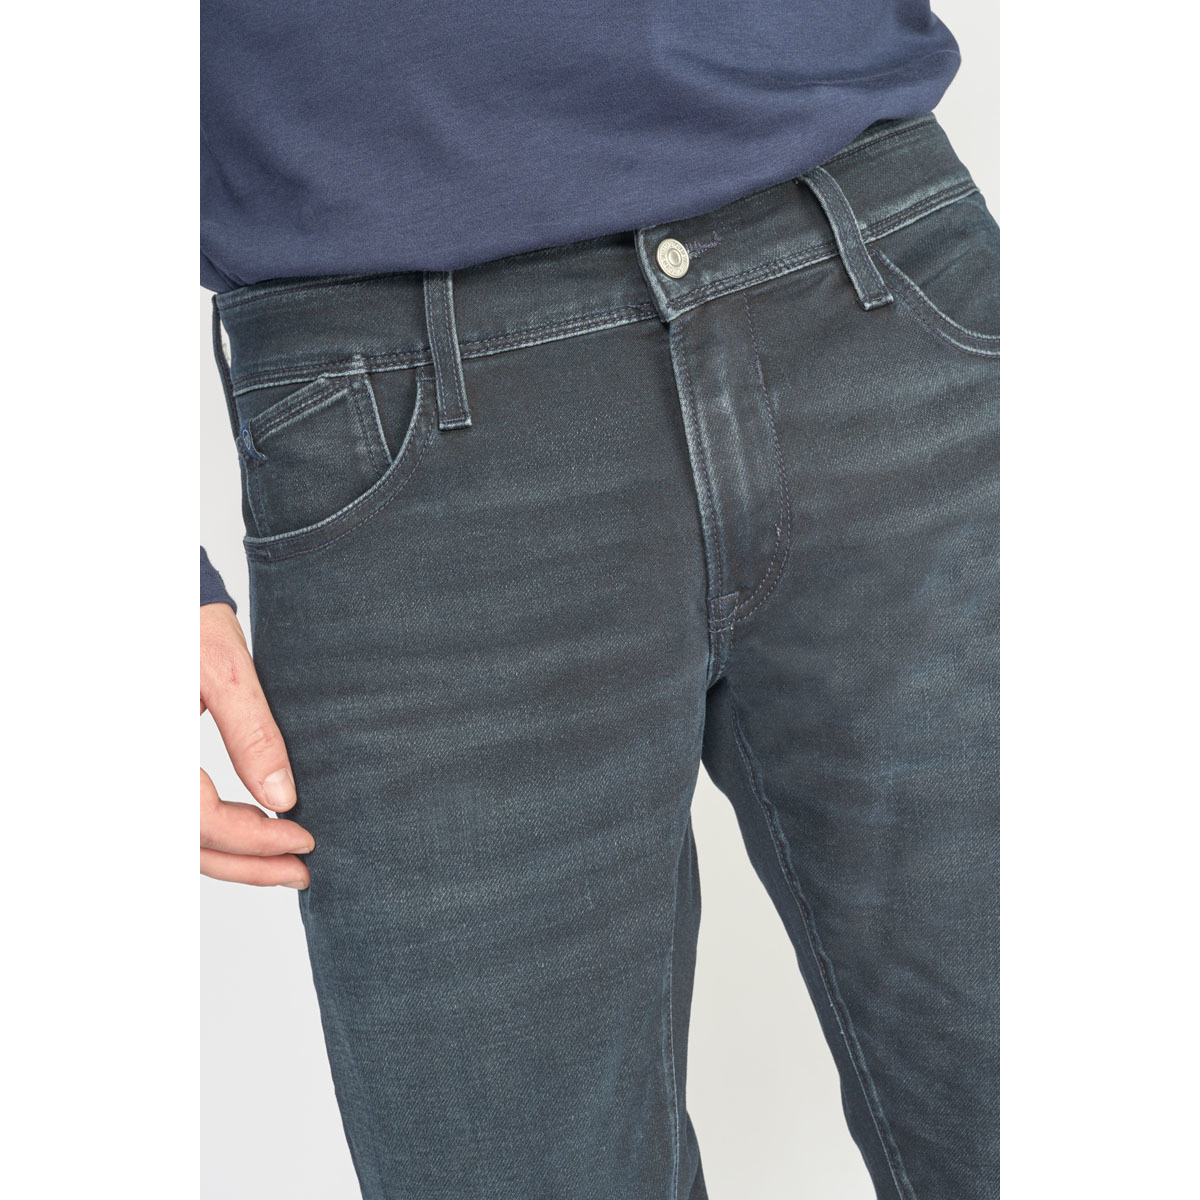 Le Temps des Cerises Bleu Jogg 700/11 adjusted jeans bleu-noir o4B4wGWs